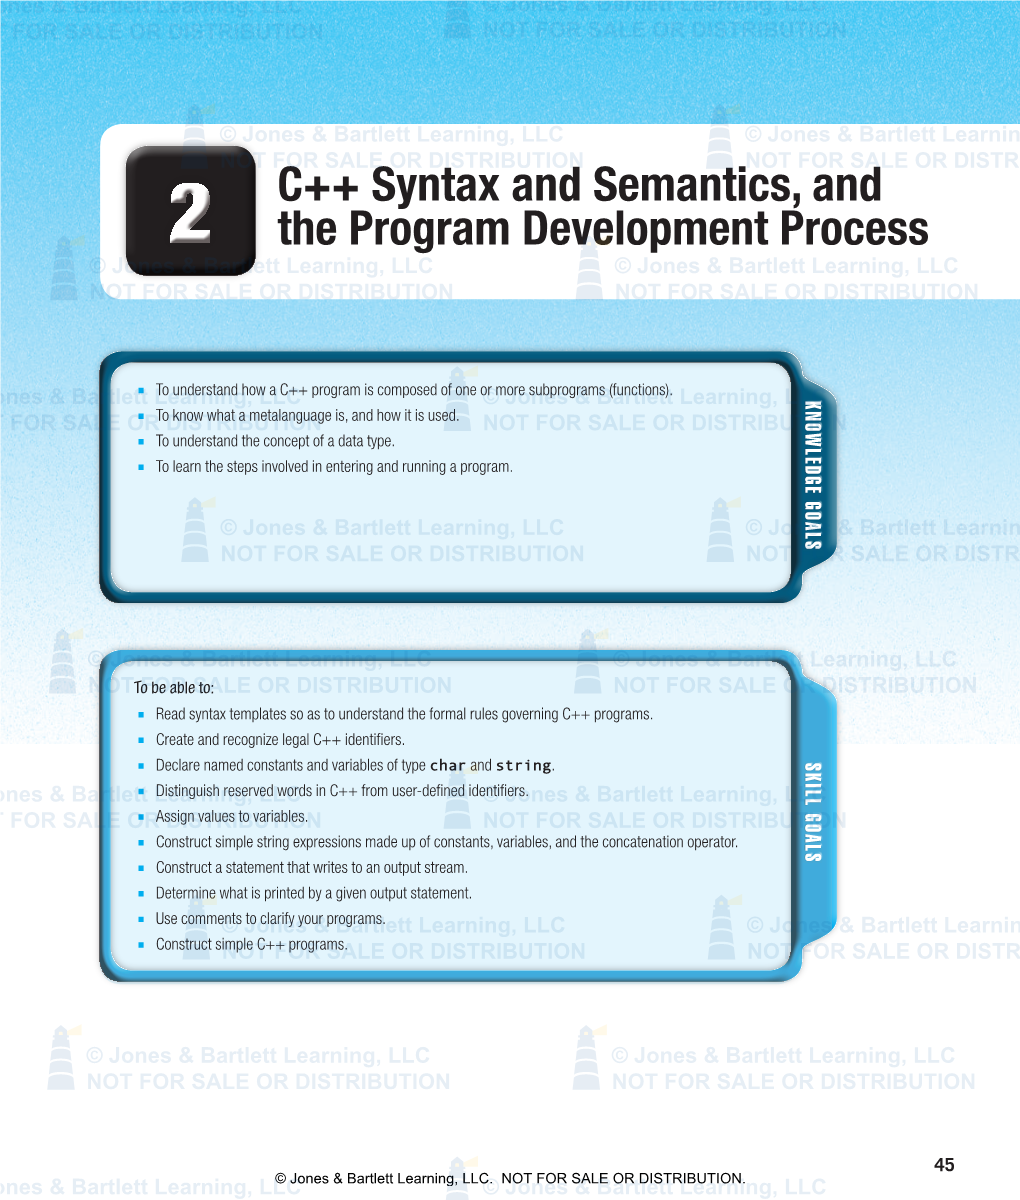 C++ Syntax and Semantics, and the Program Development Process